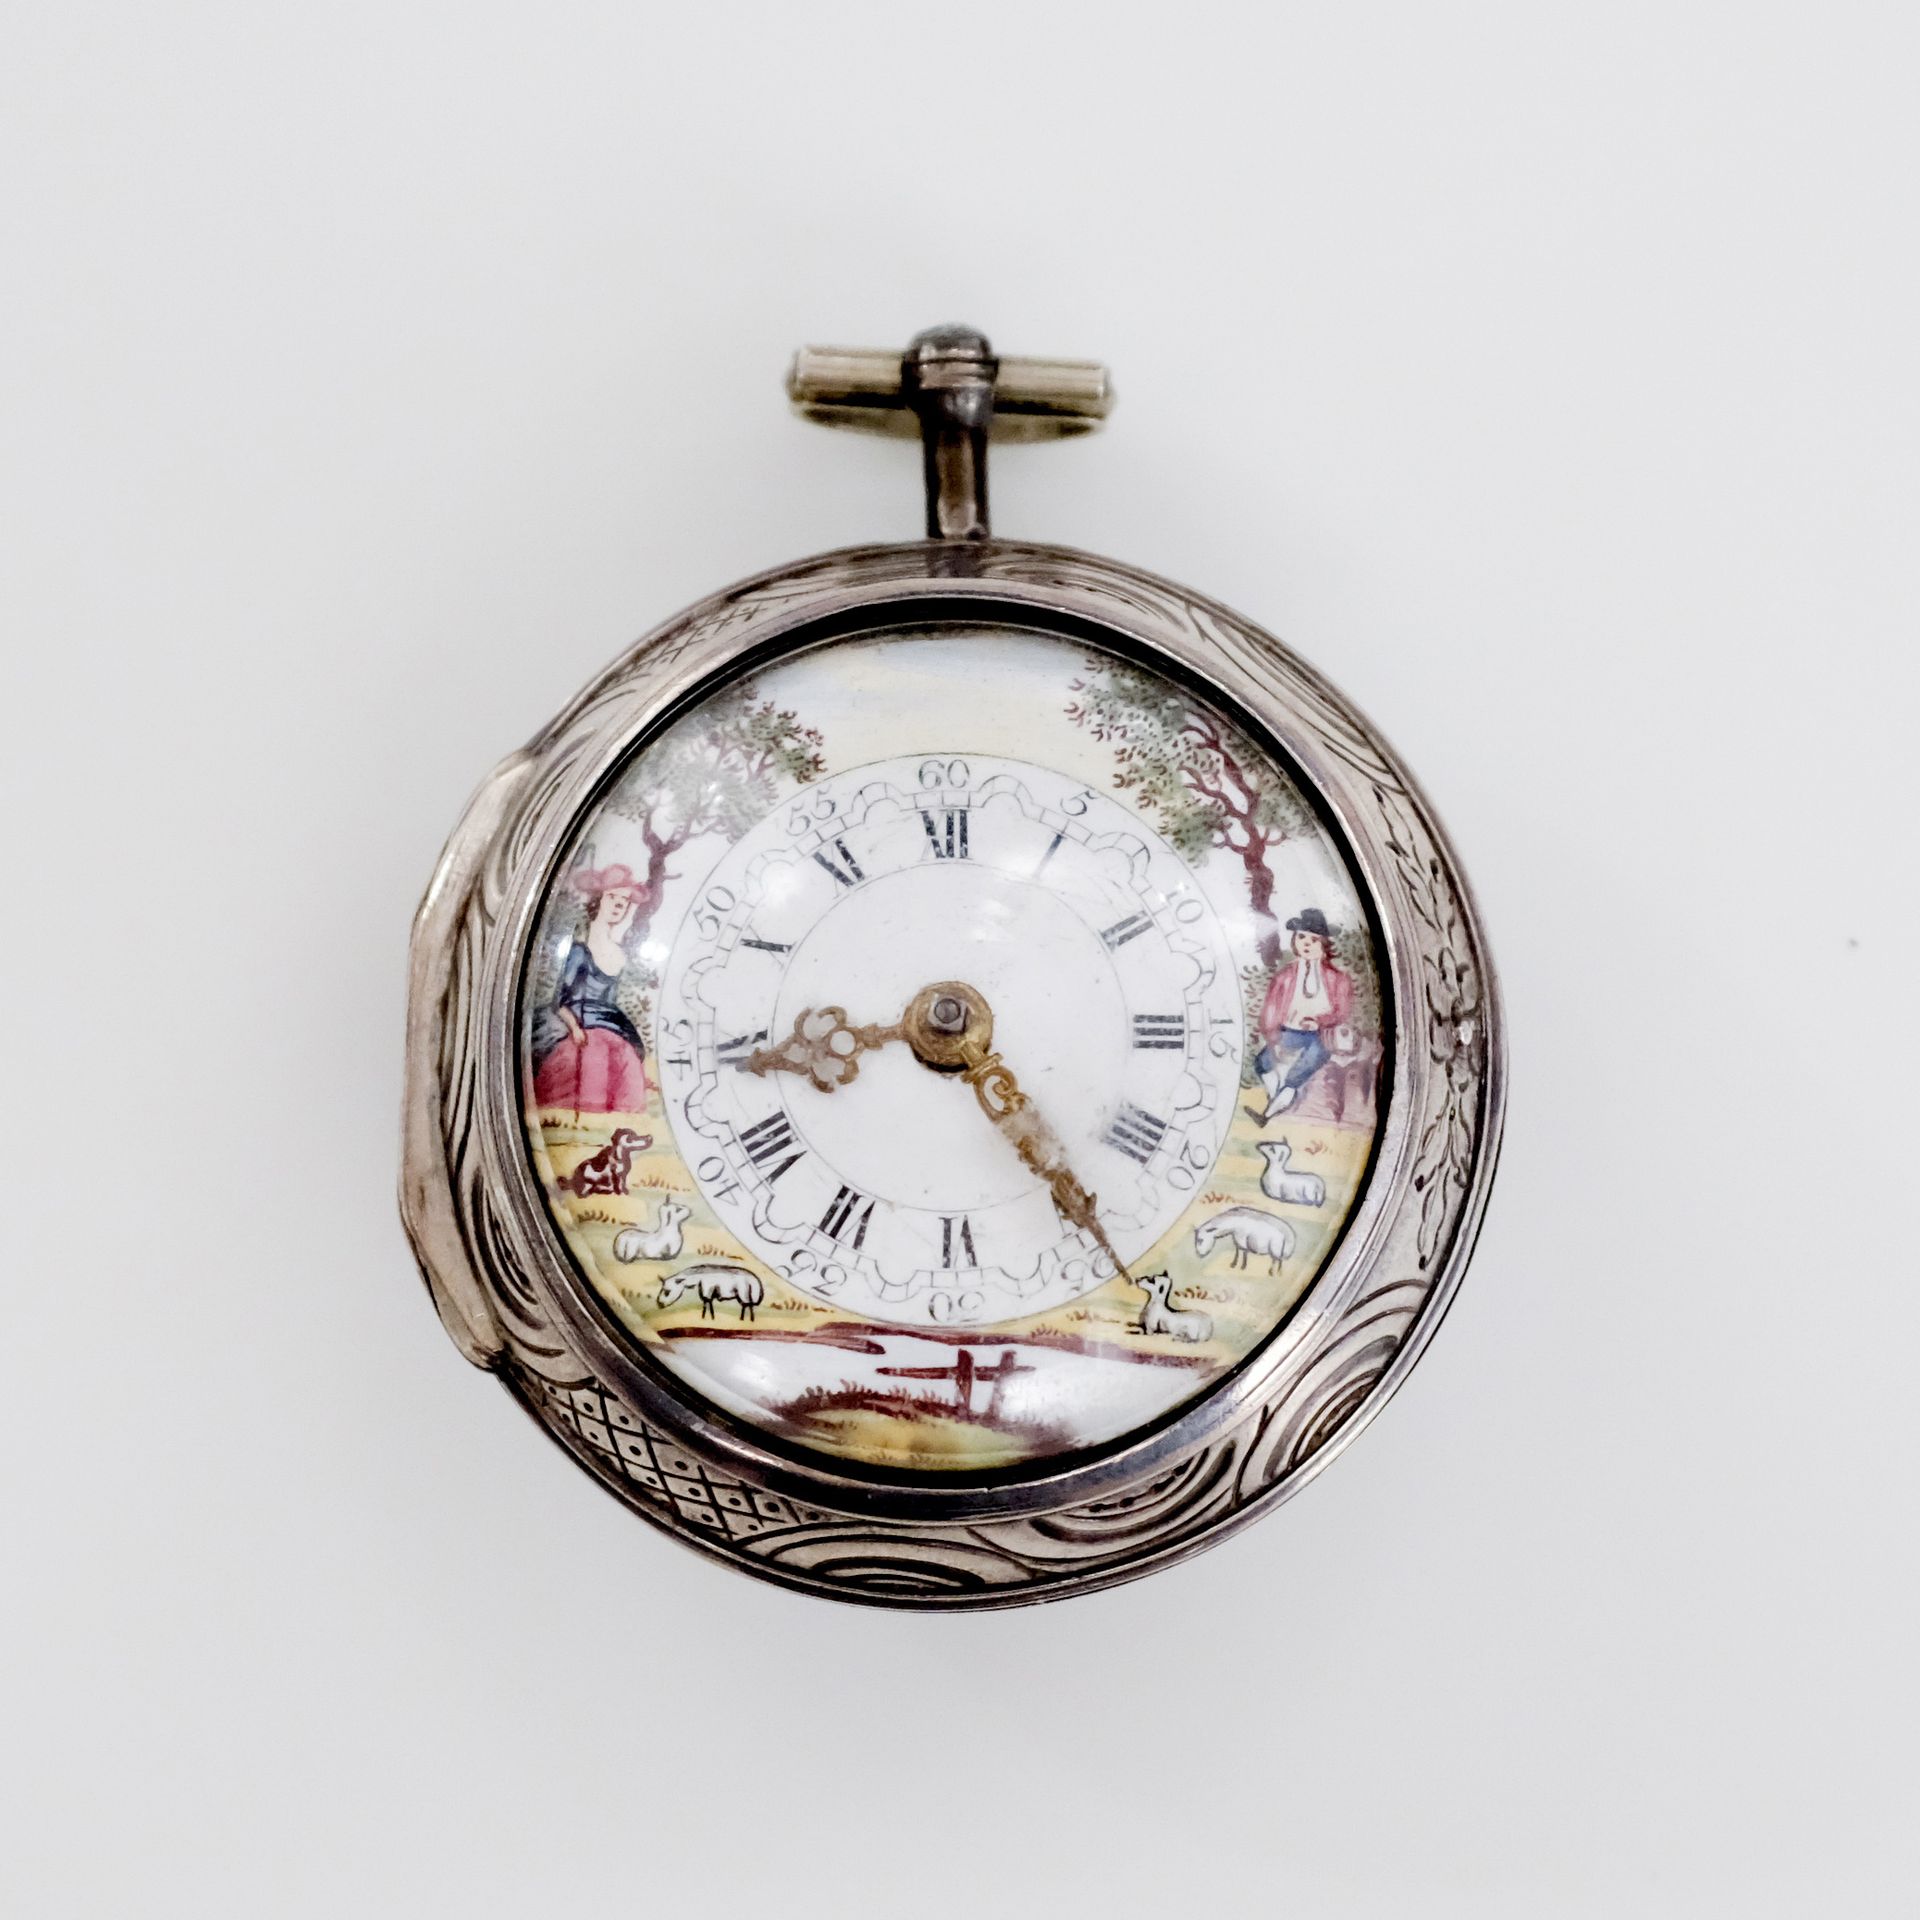 STEPH CUNDEE À LONDRES N° 6466
Reloj de bolsillo de plata, esfera de esmalte bla&hellip;